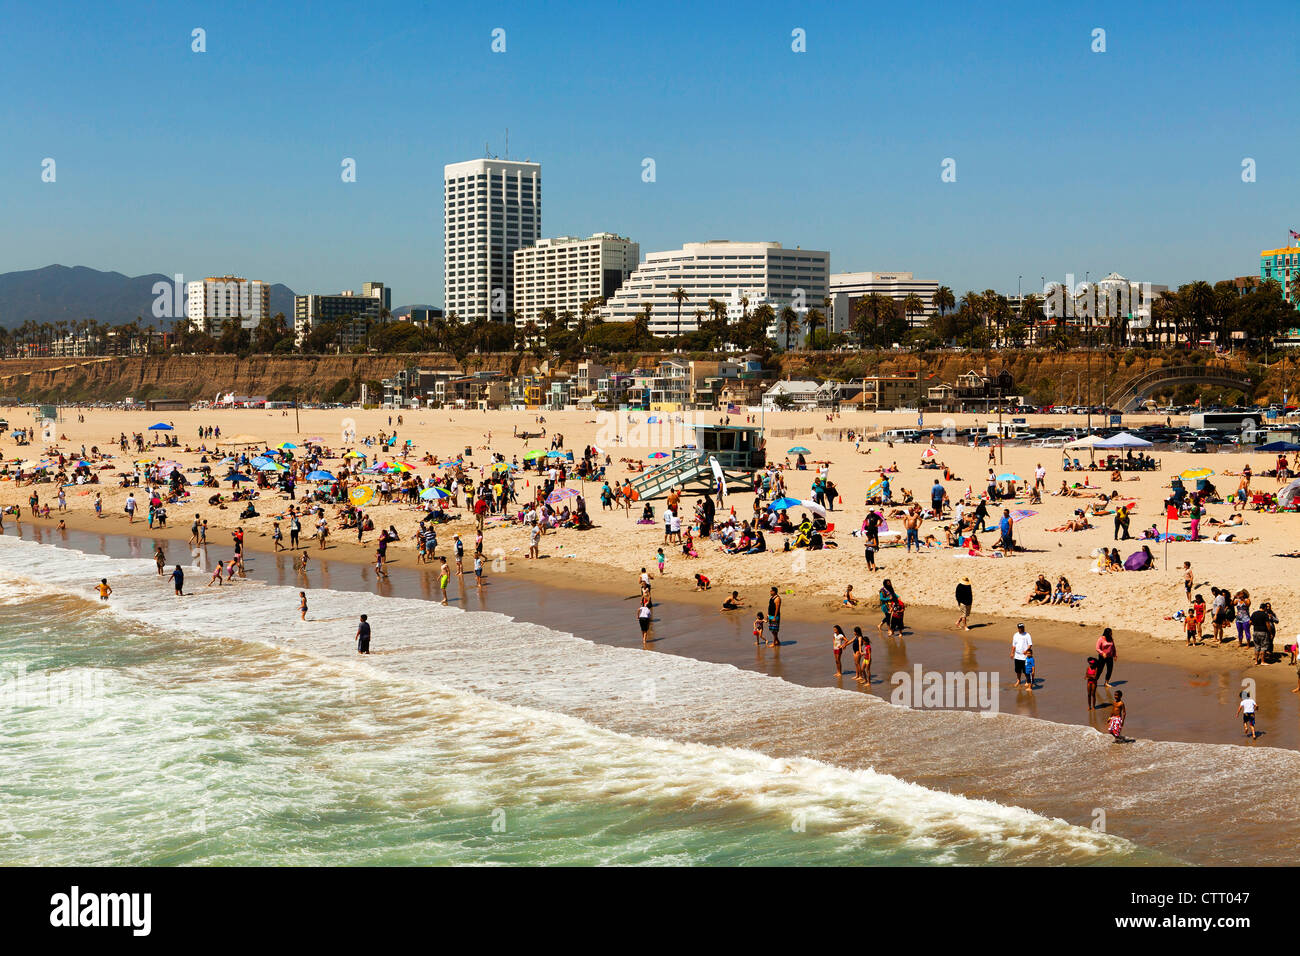 La plage de Santa Monica, Los Angeles Banque D'Images